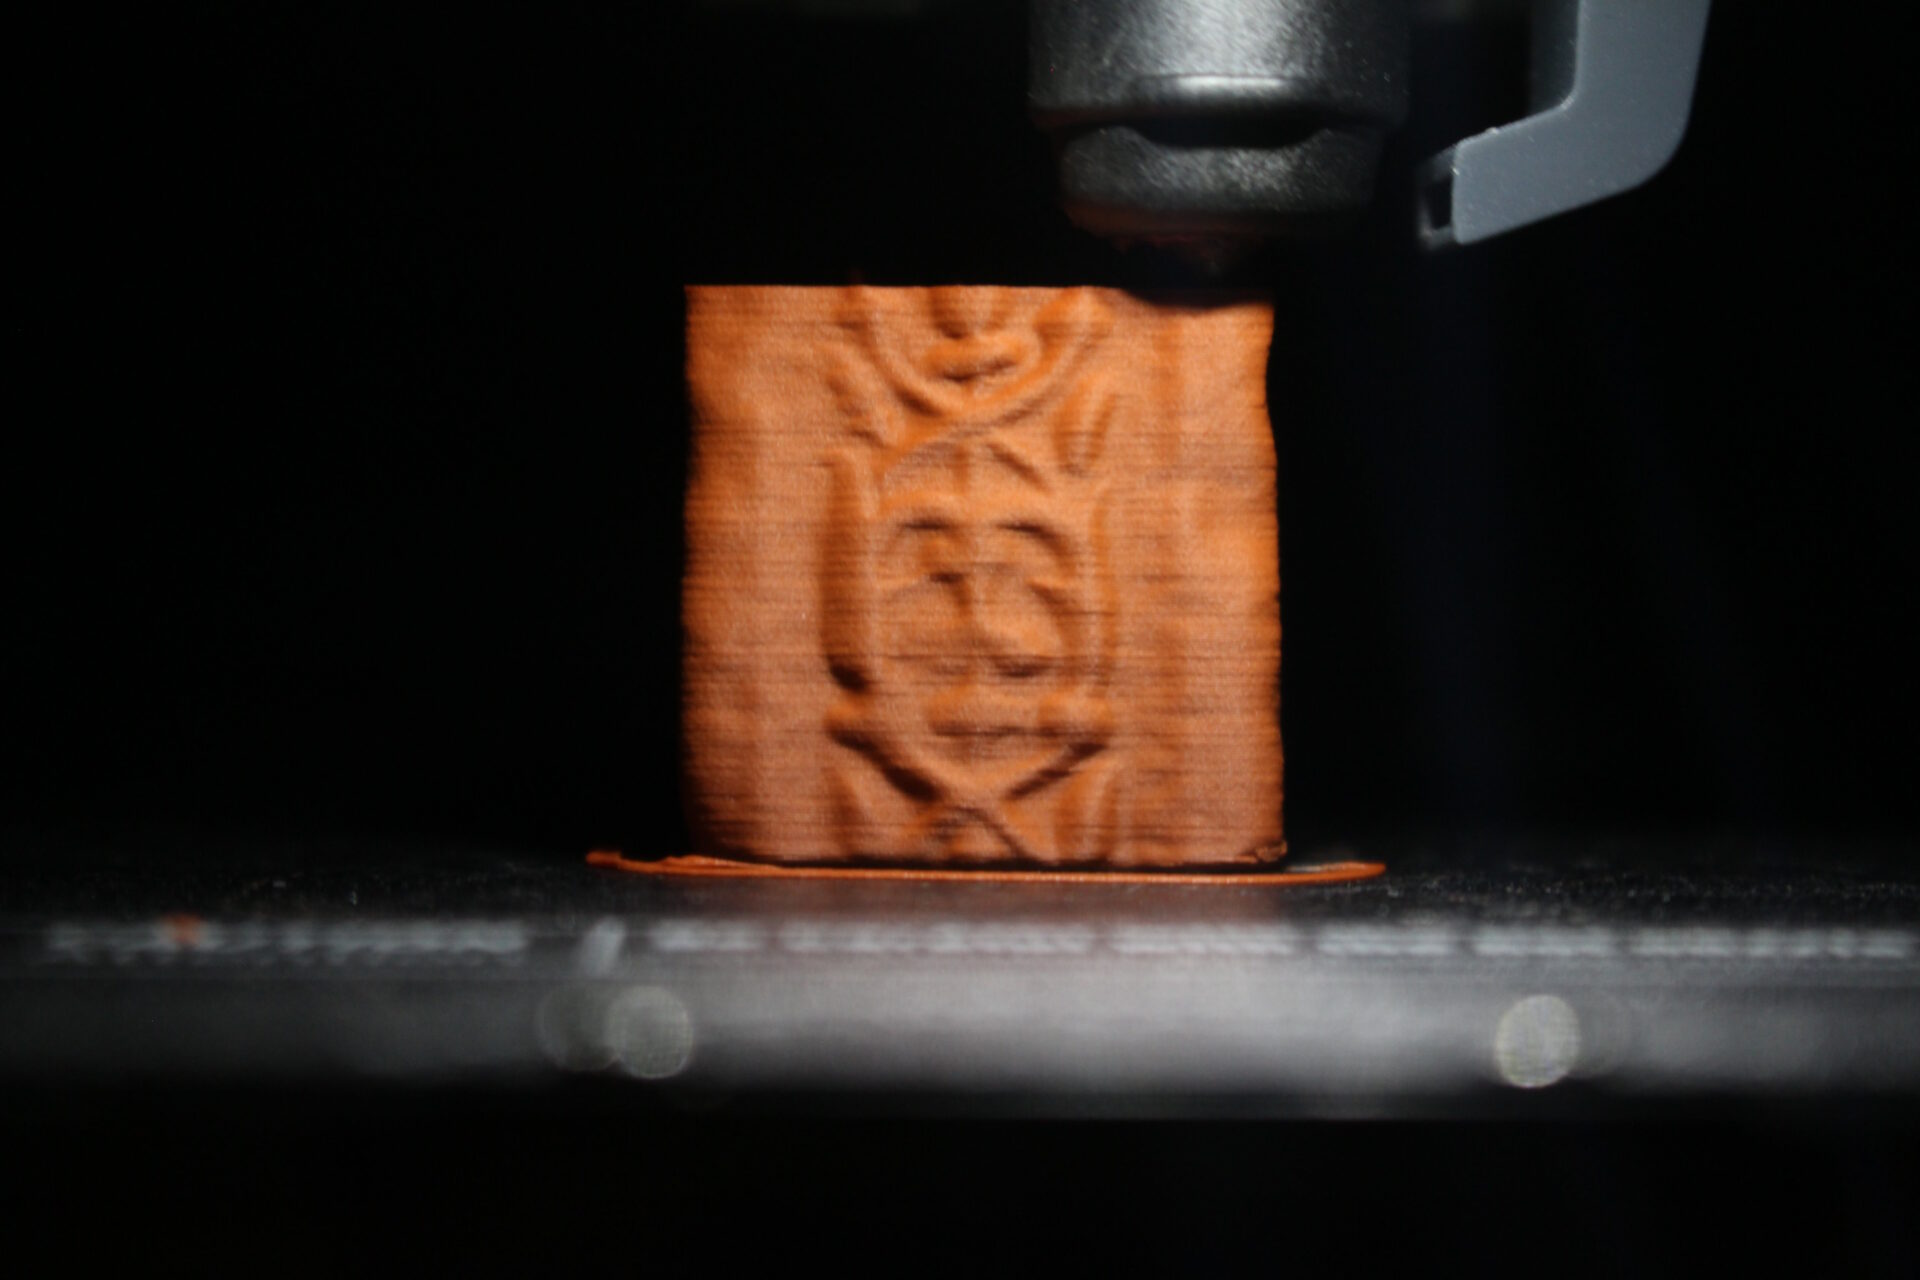 3D printer nozzle extruding terracotta plastic to produce a pillar.